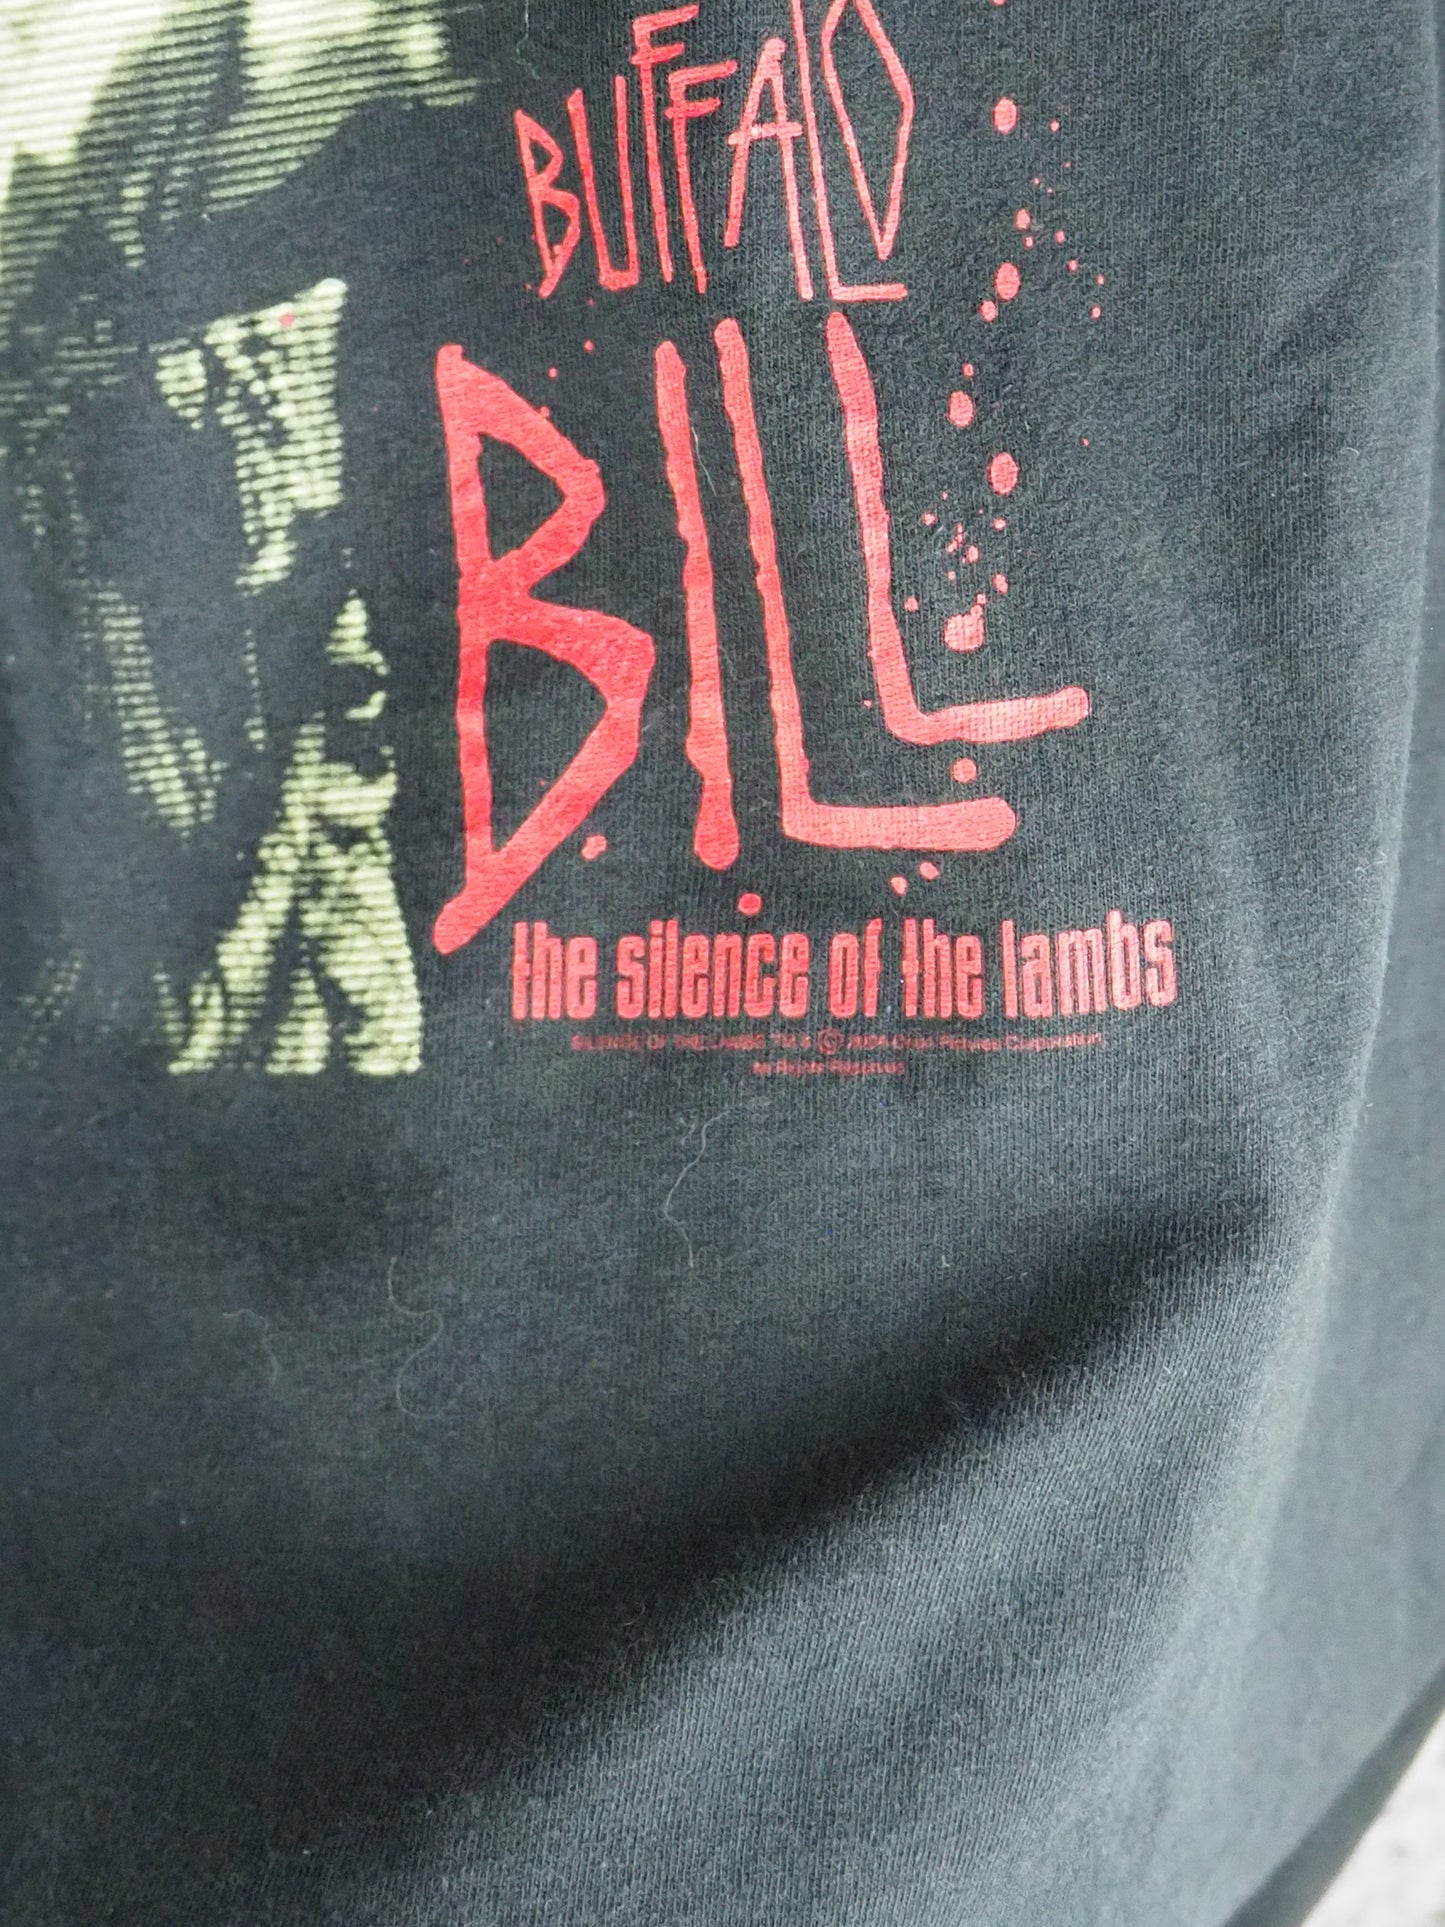 Vintage Silence of the Lambs "Buffalo Bill" t-shirt - size XL